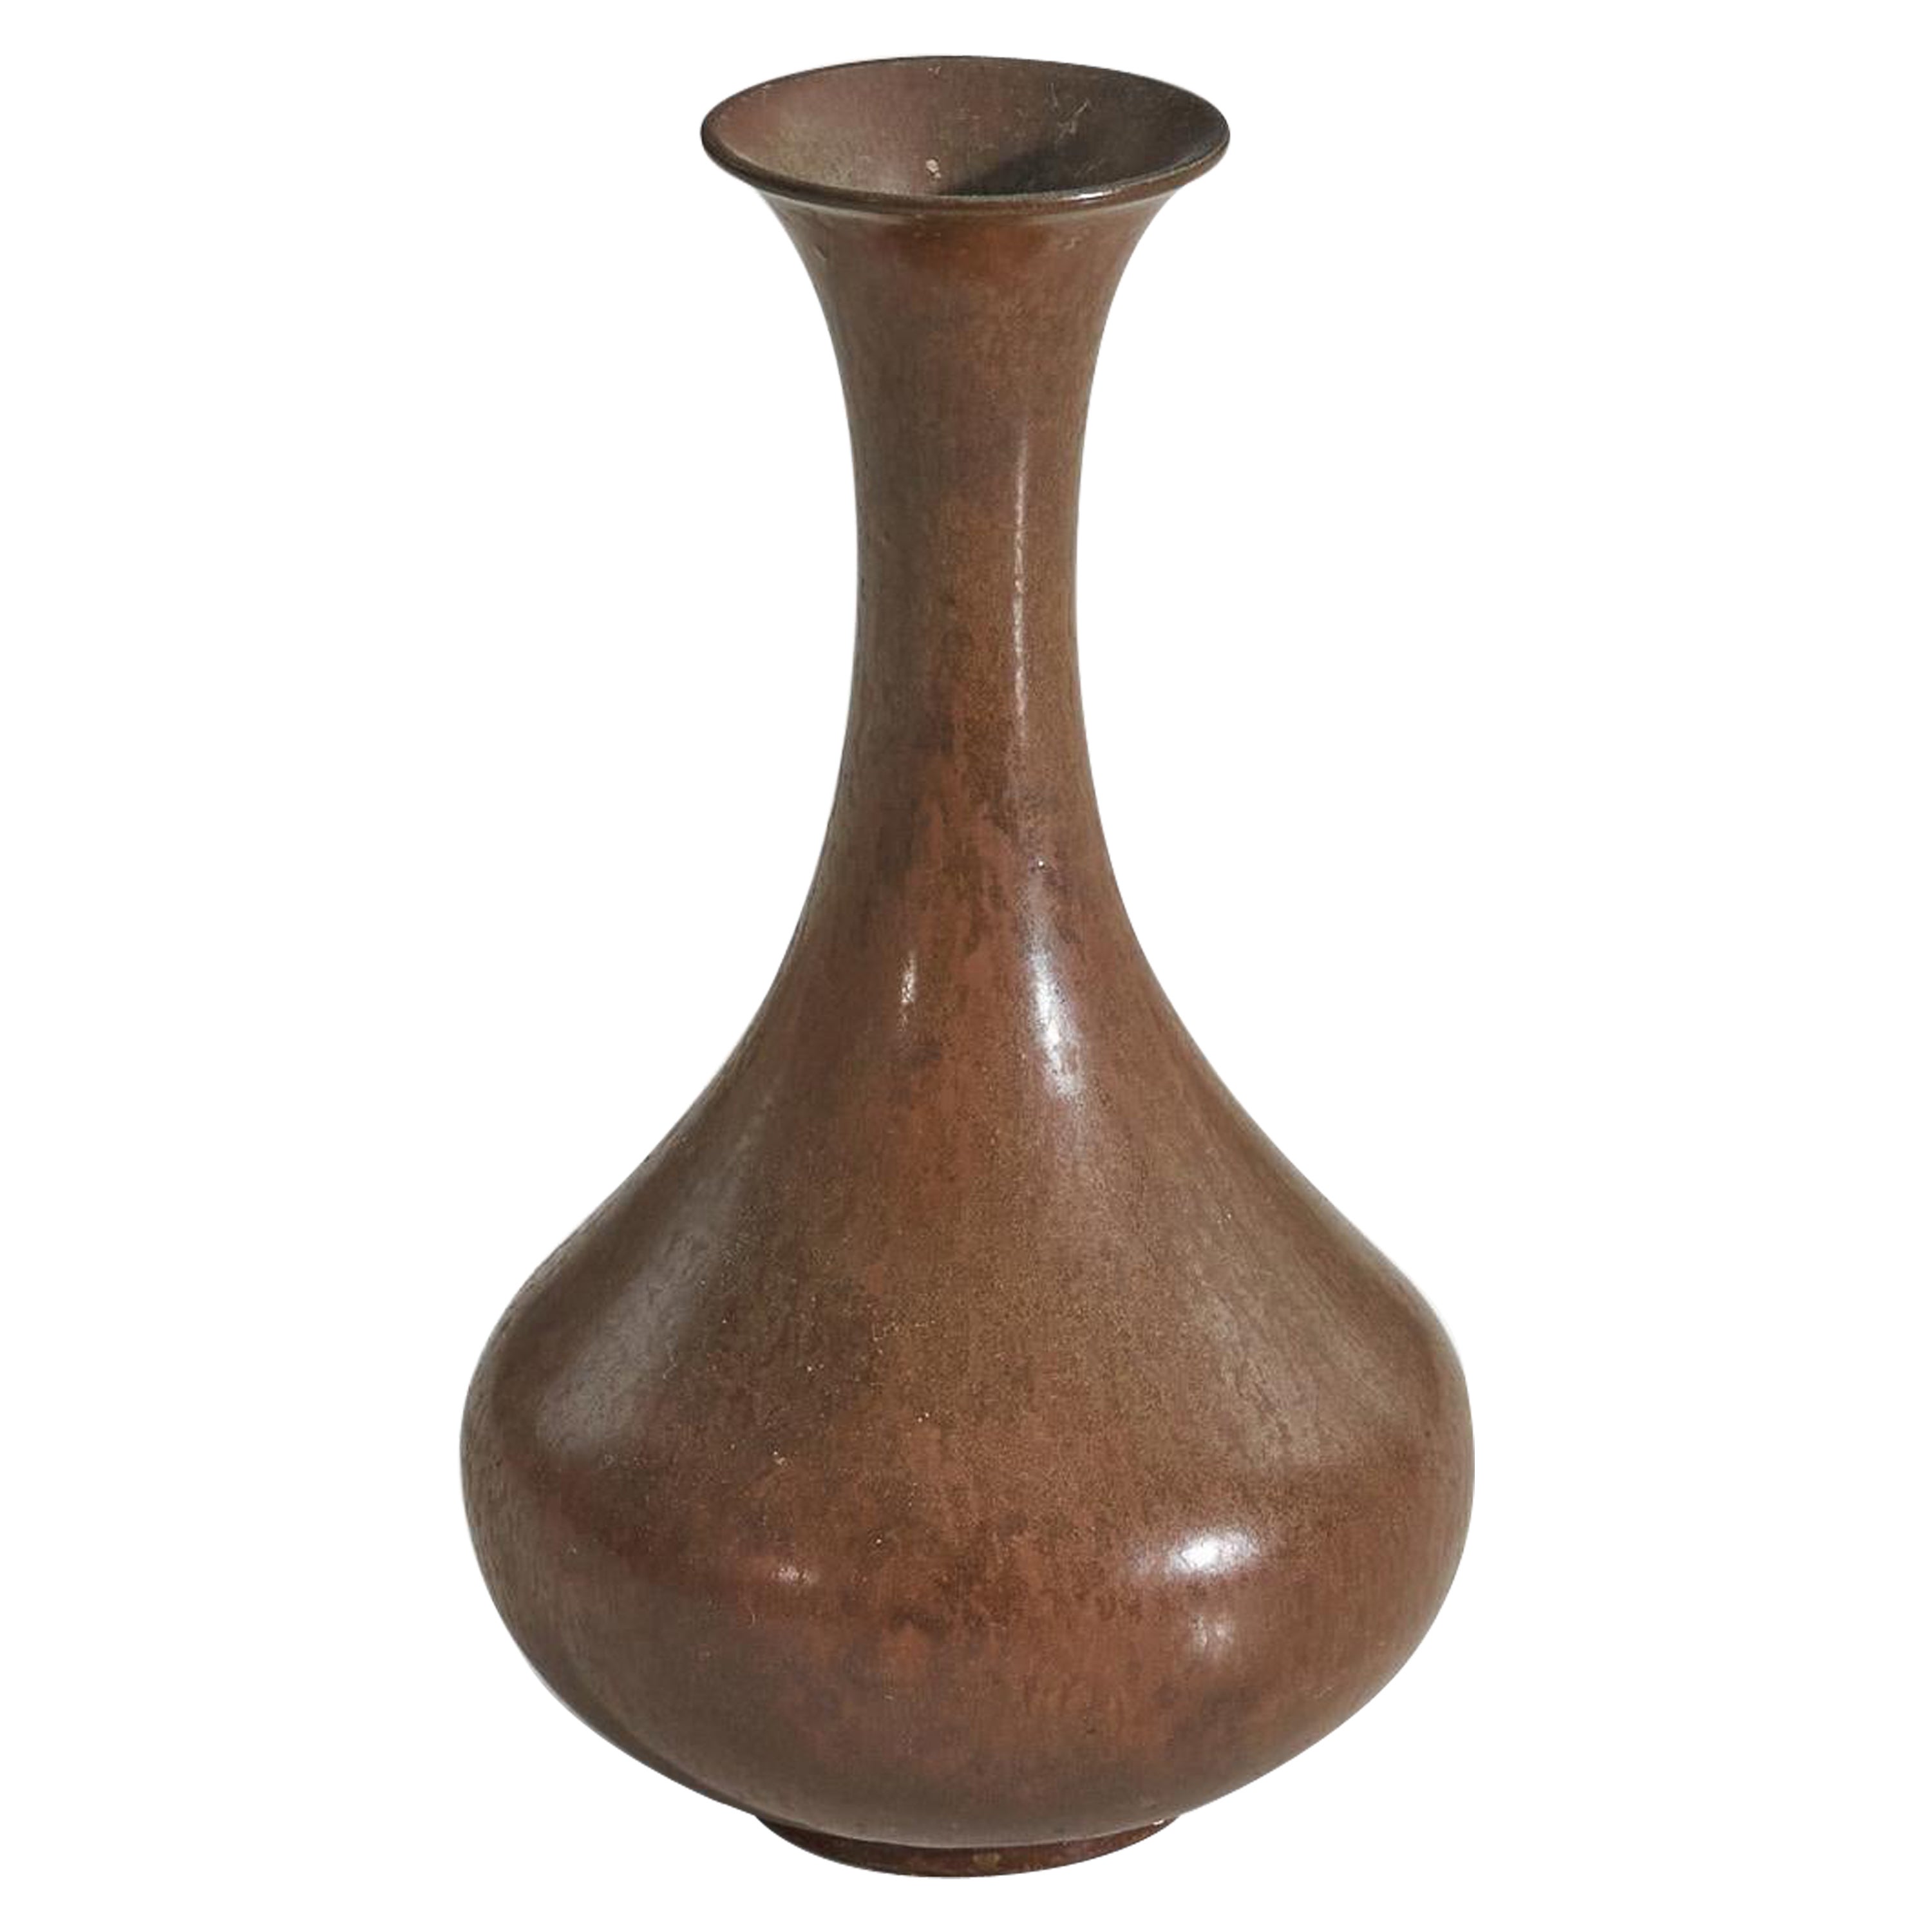 Gunnar Nylund, "ARA" Model Vase, Brown-Glazed Stoneware, Rörstand, Sweden, 1950s For Sale